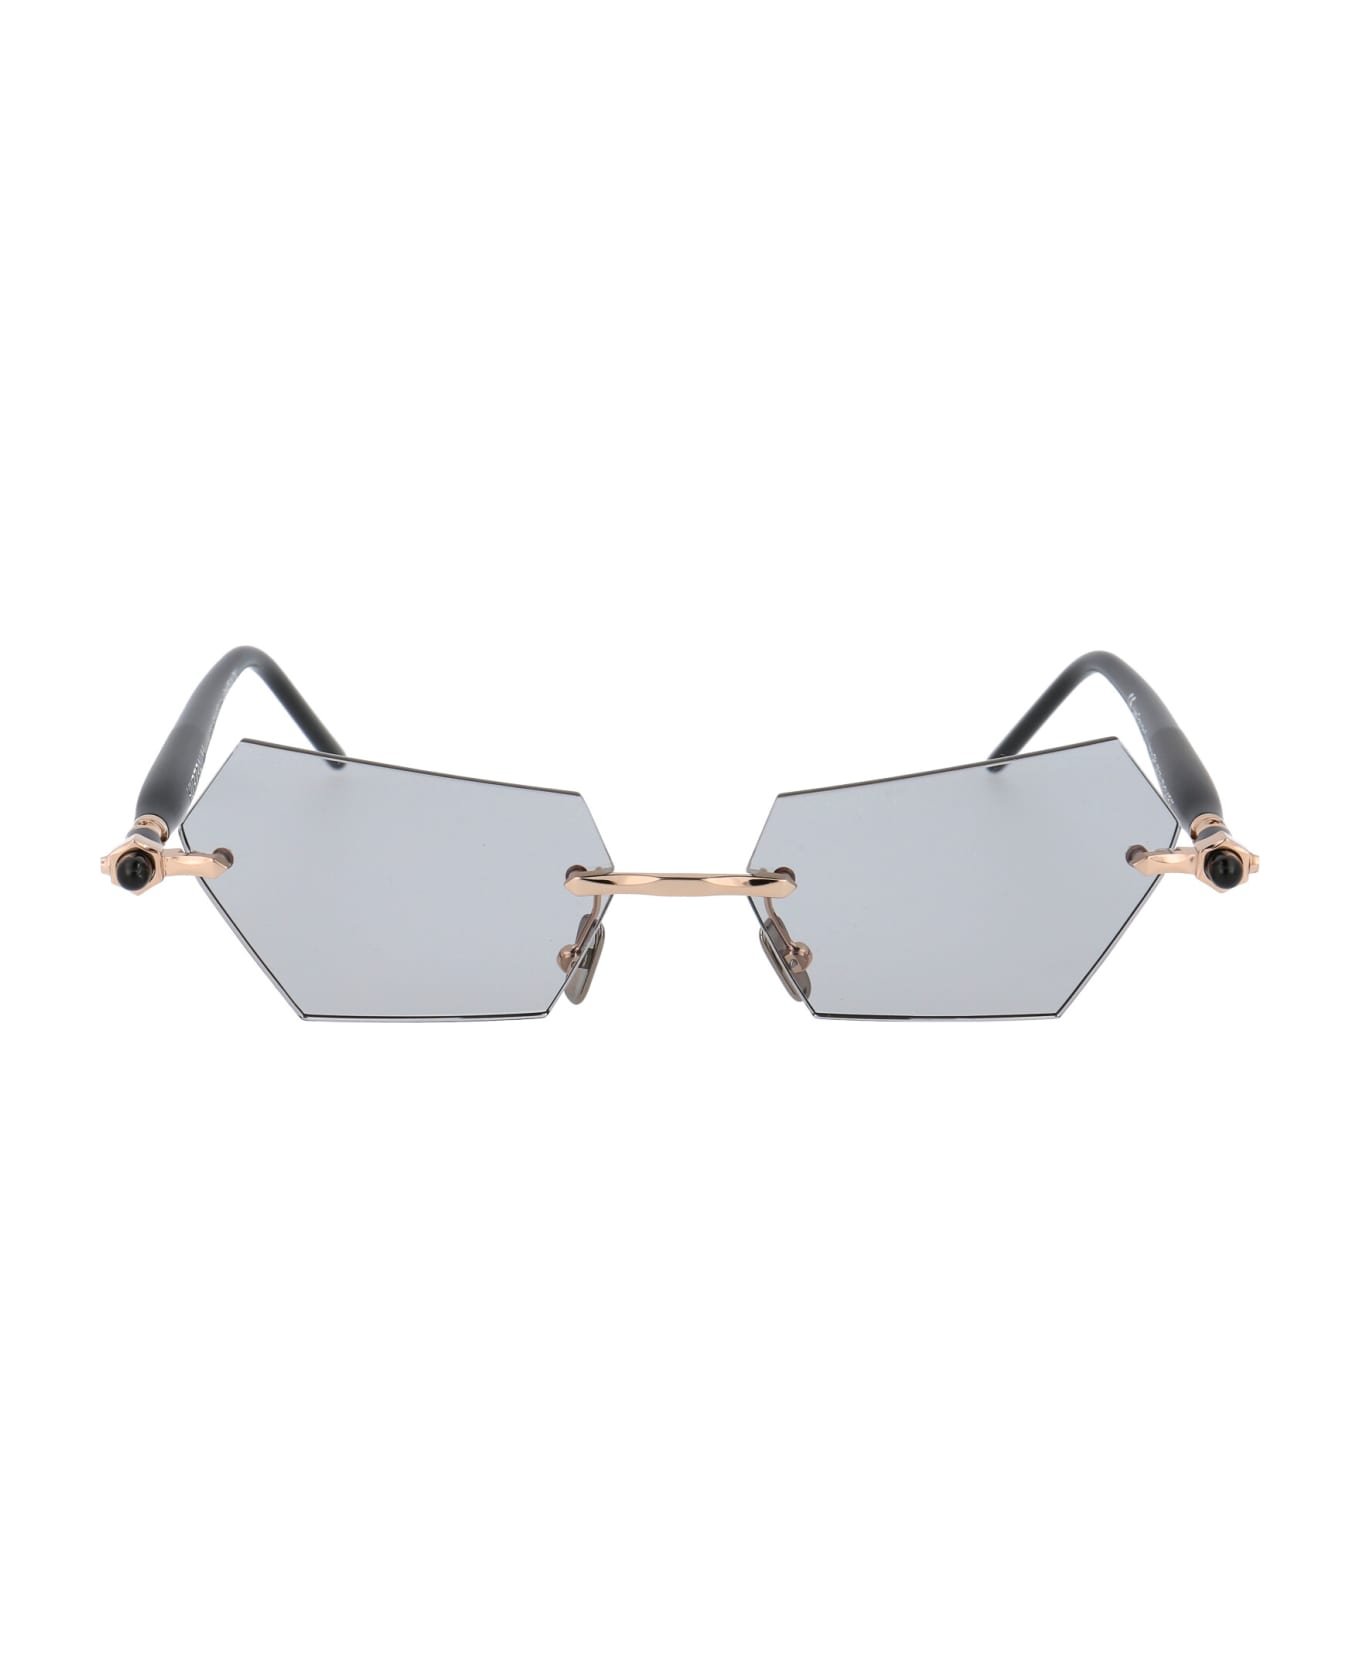 Kuboraum Maske P51 Sunglasses - PG BB grey1 サングラス